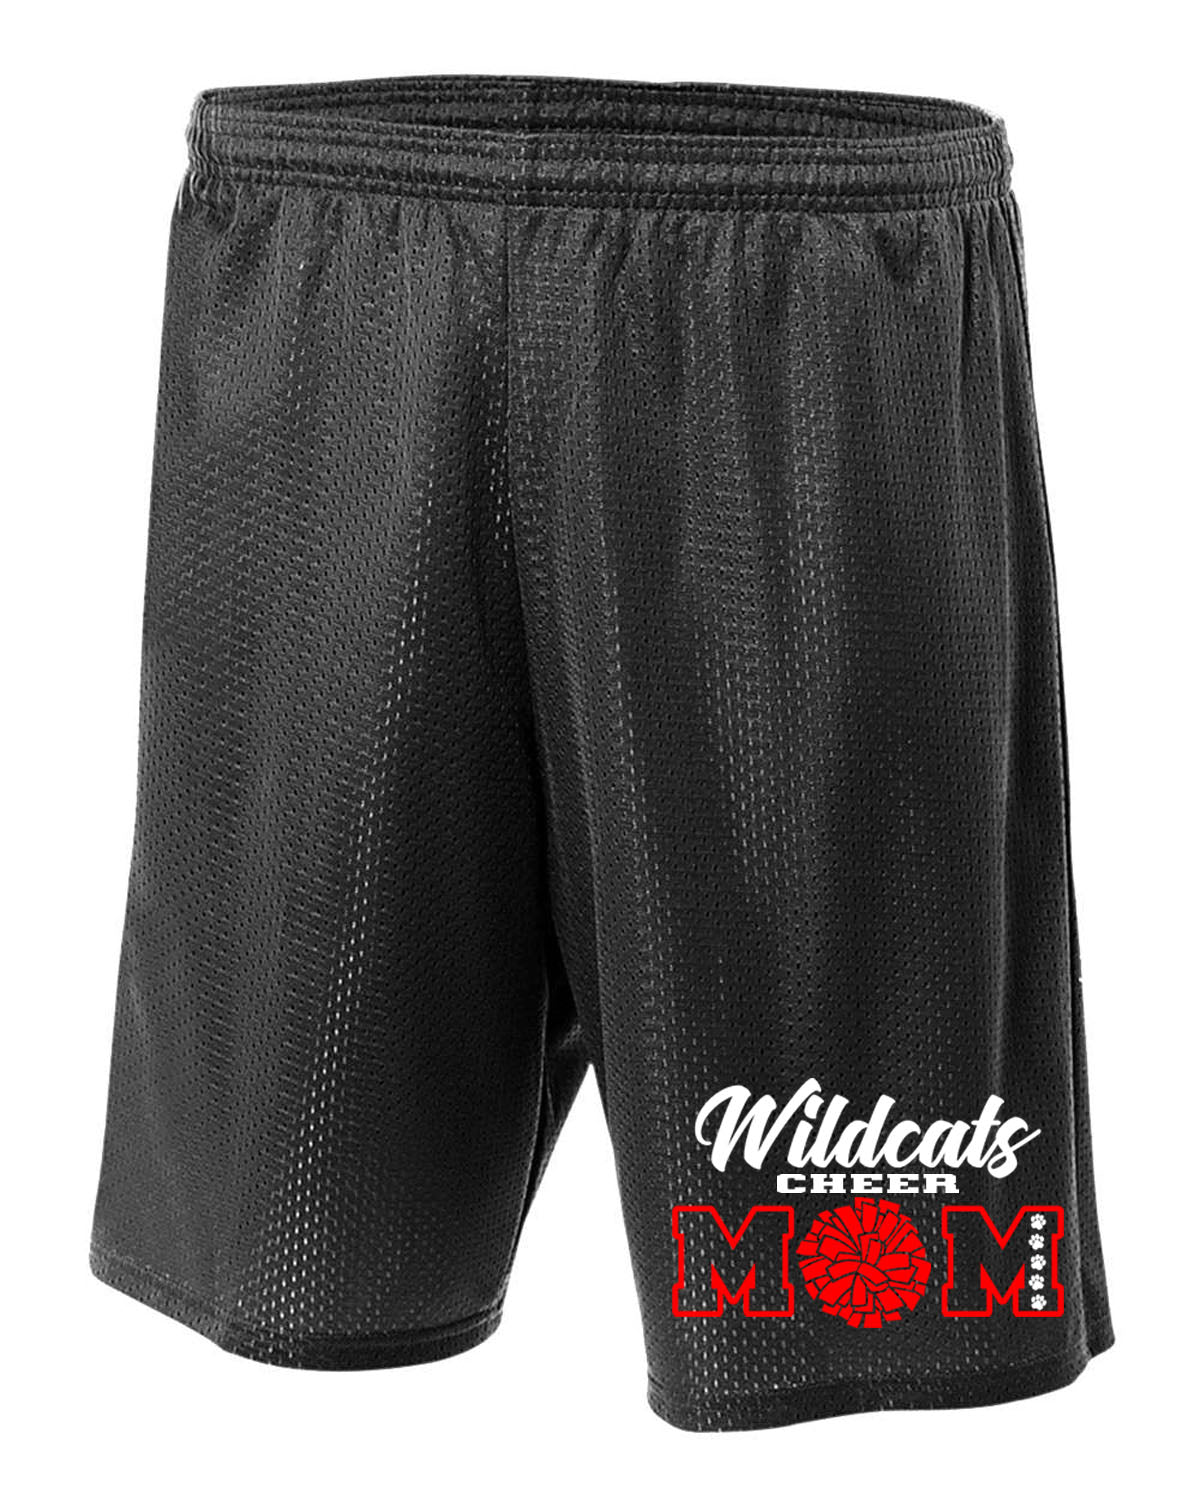 Wildcats Cheer Design 7 Mesh Shorts